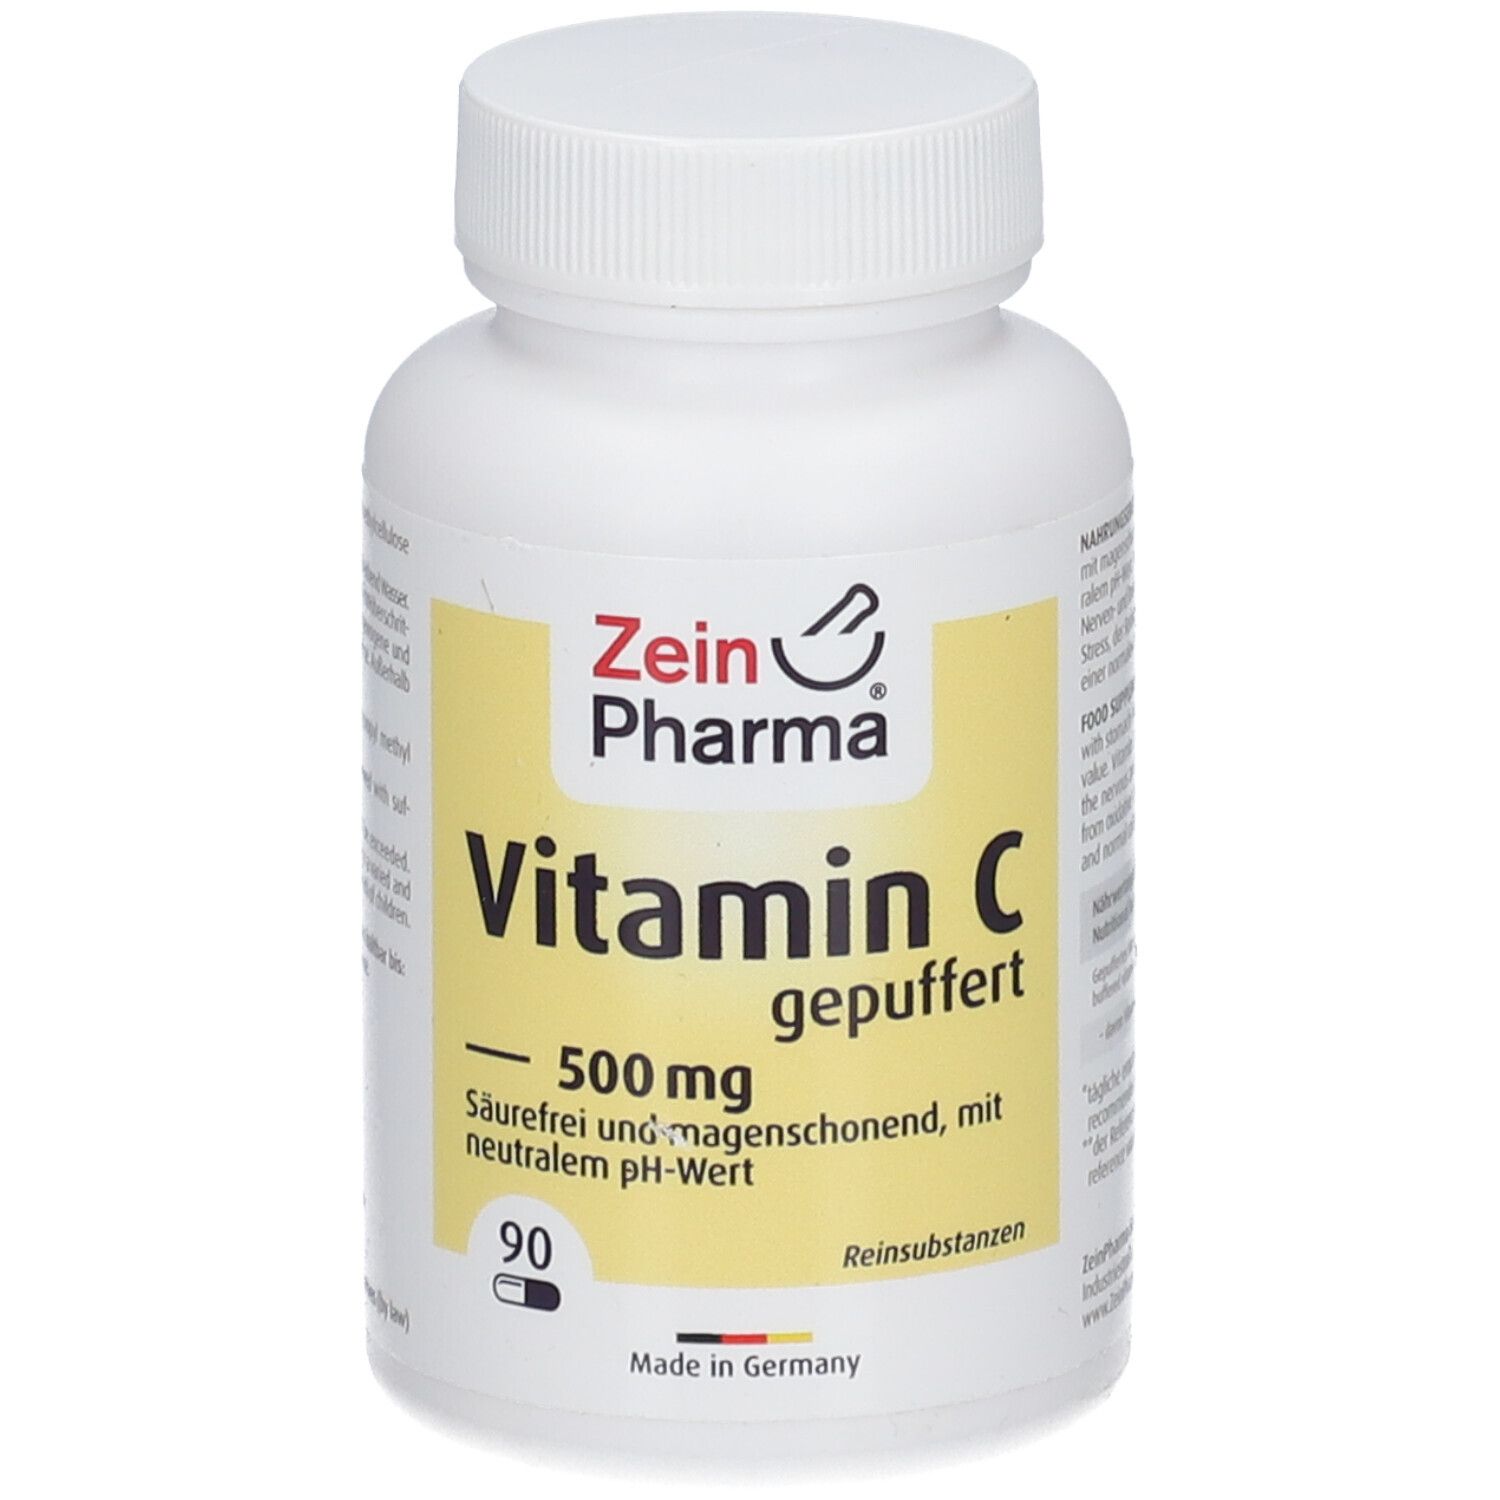 3000 mg c vitamin